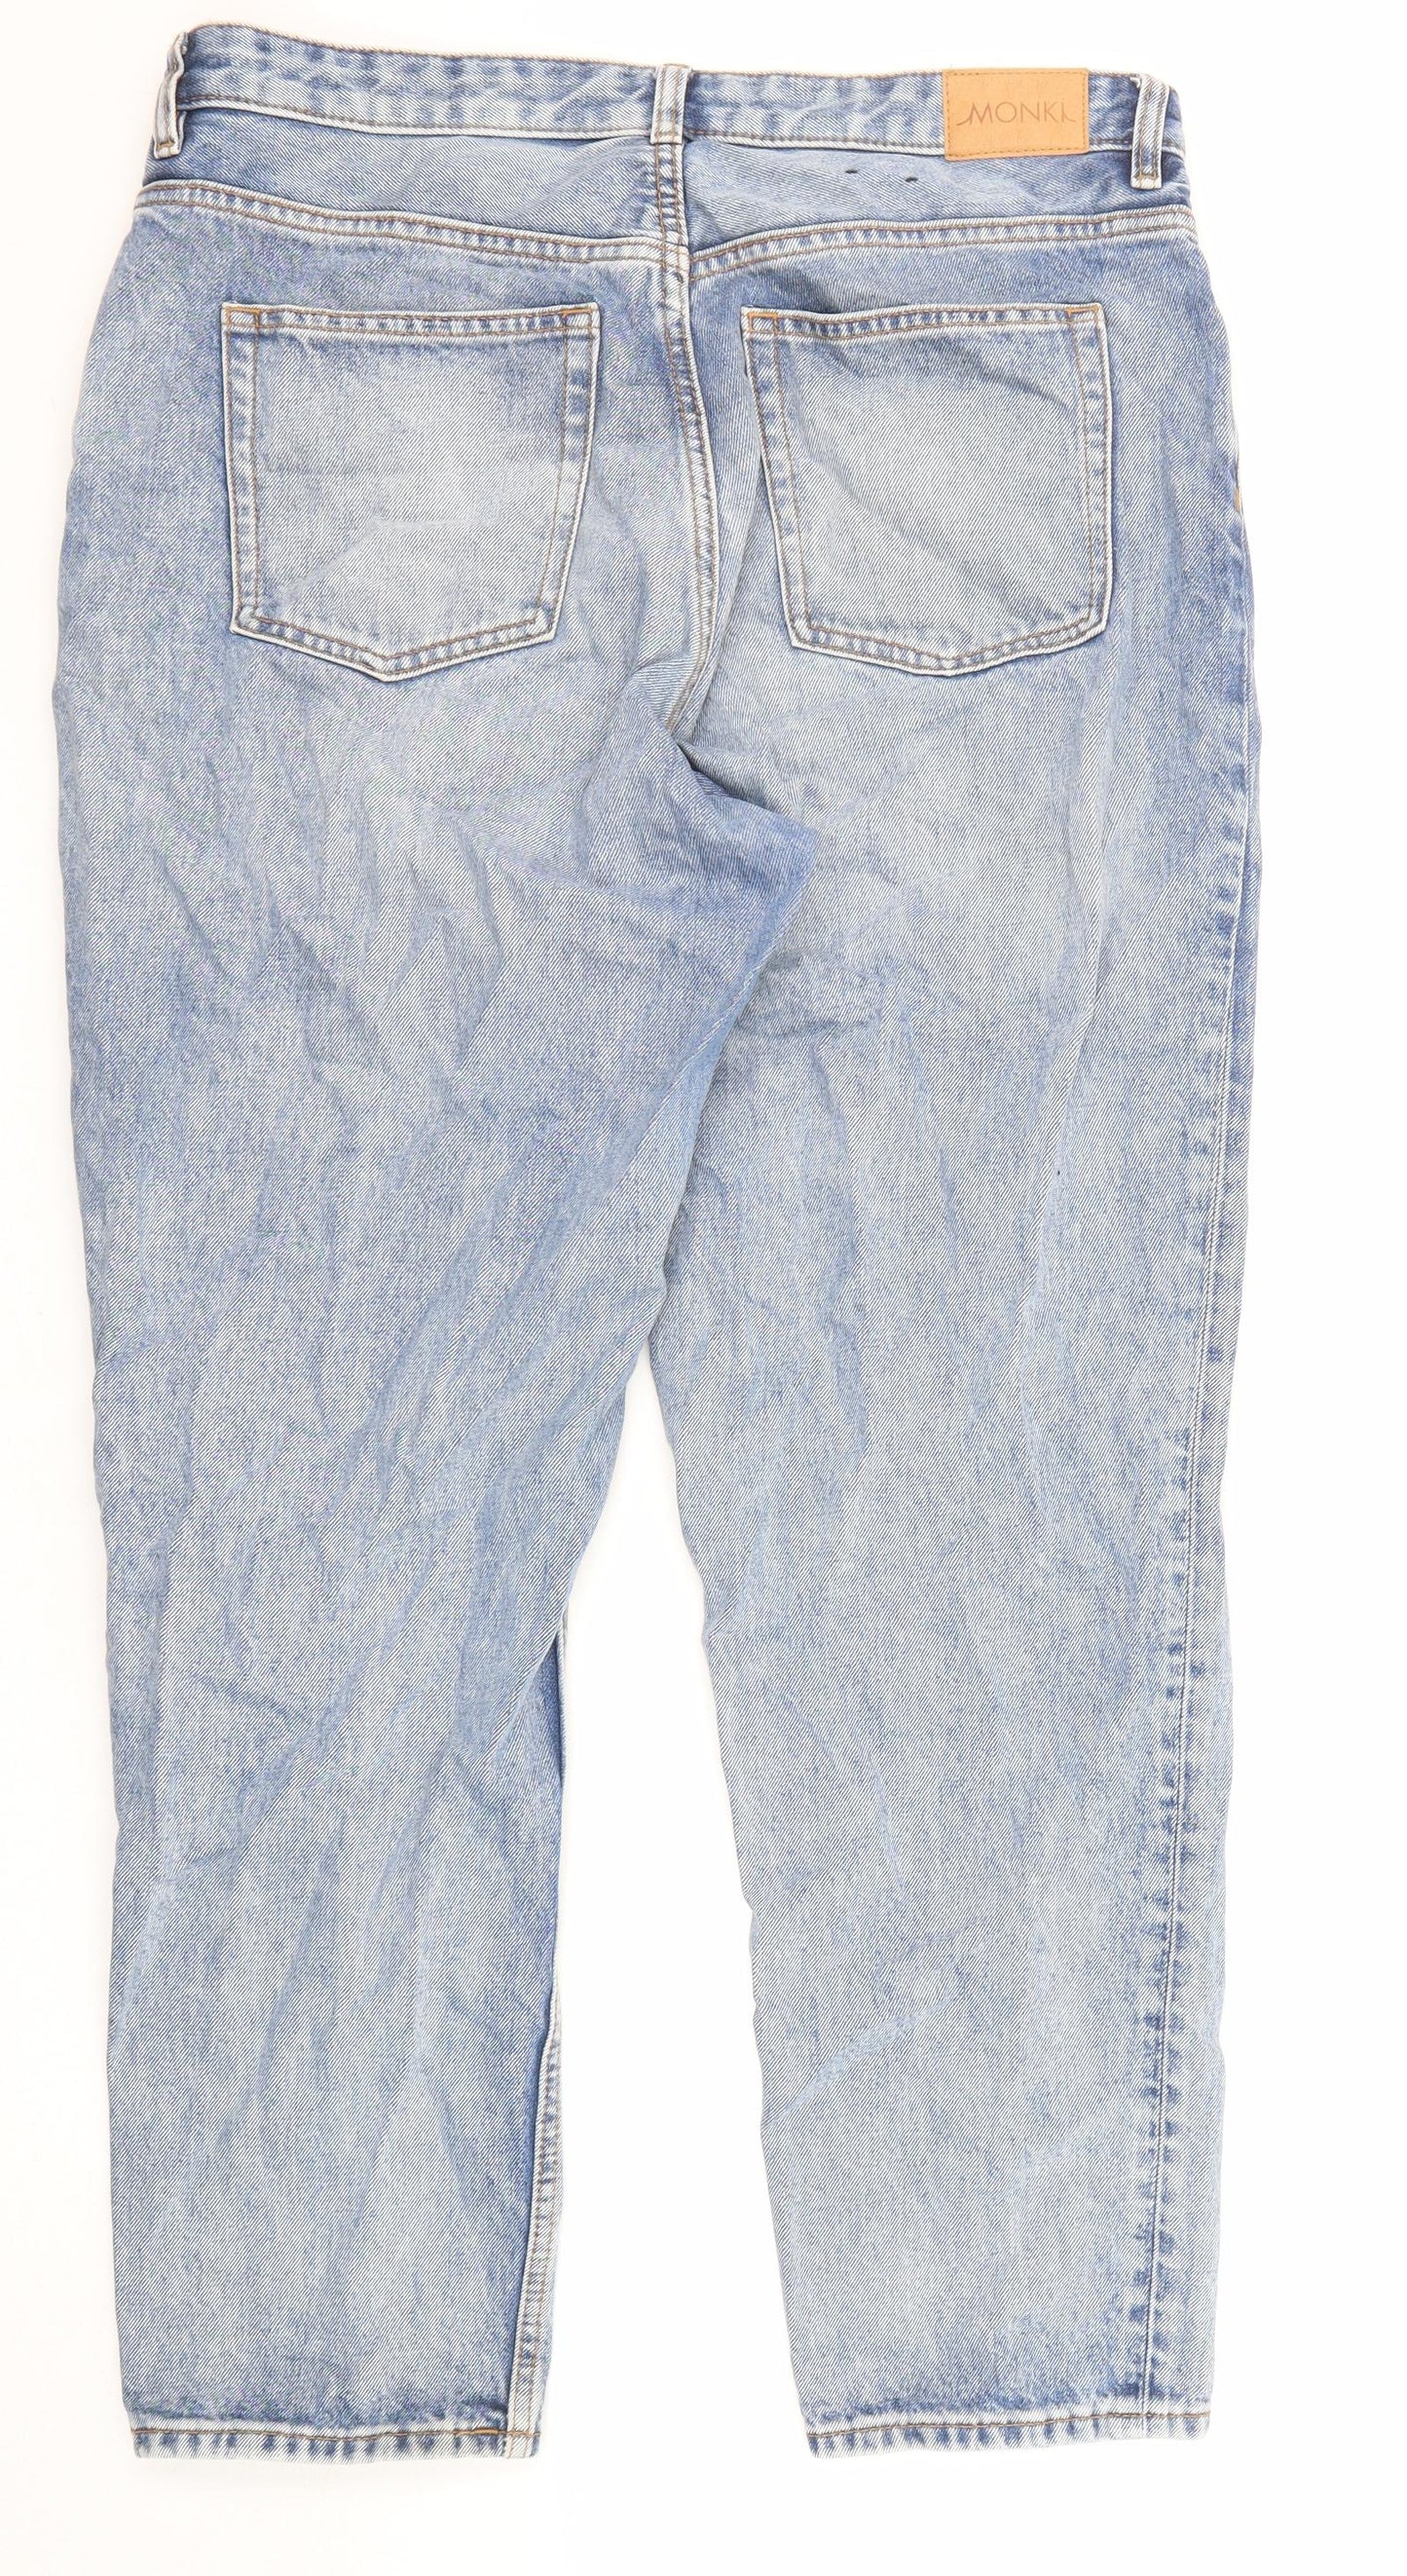 Monki Womens Blue Cotton Mom Jeans Size 34 in Regular Zip